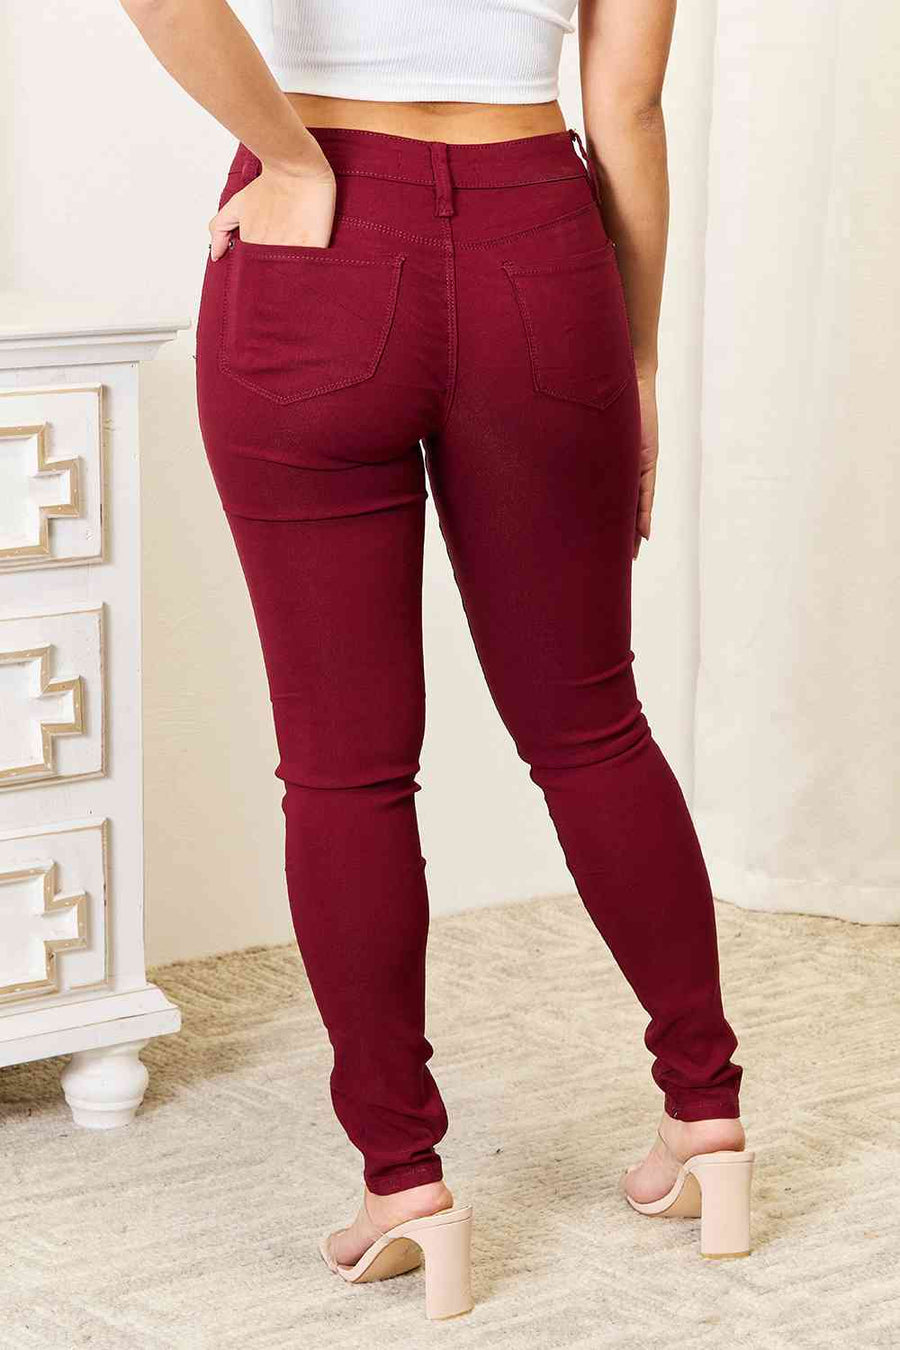 YMI Jeanswear Jeans skinny com bolsos-Trendsi-Wine-S-SatinBoutique